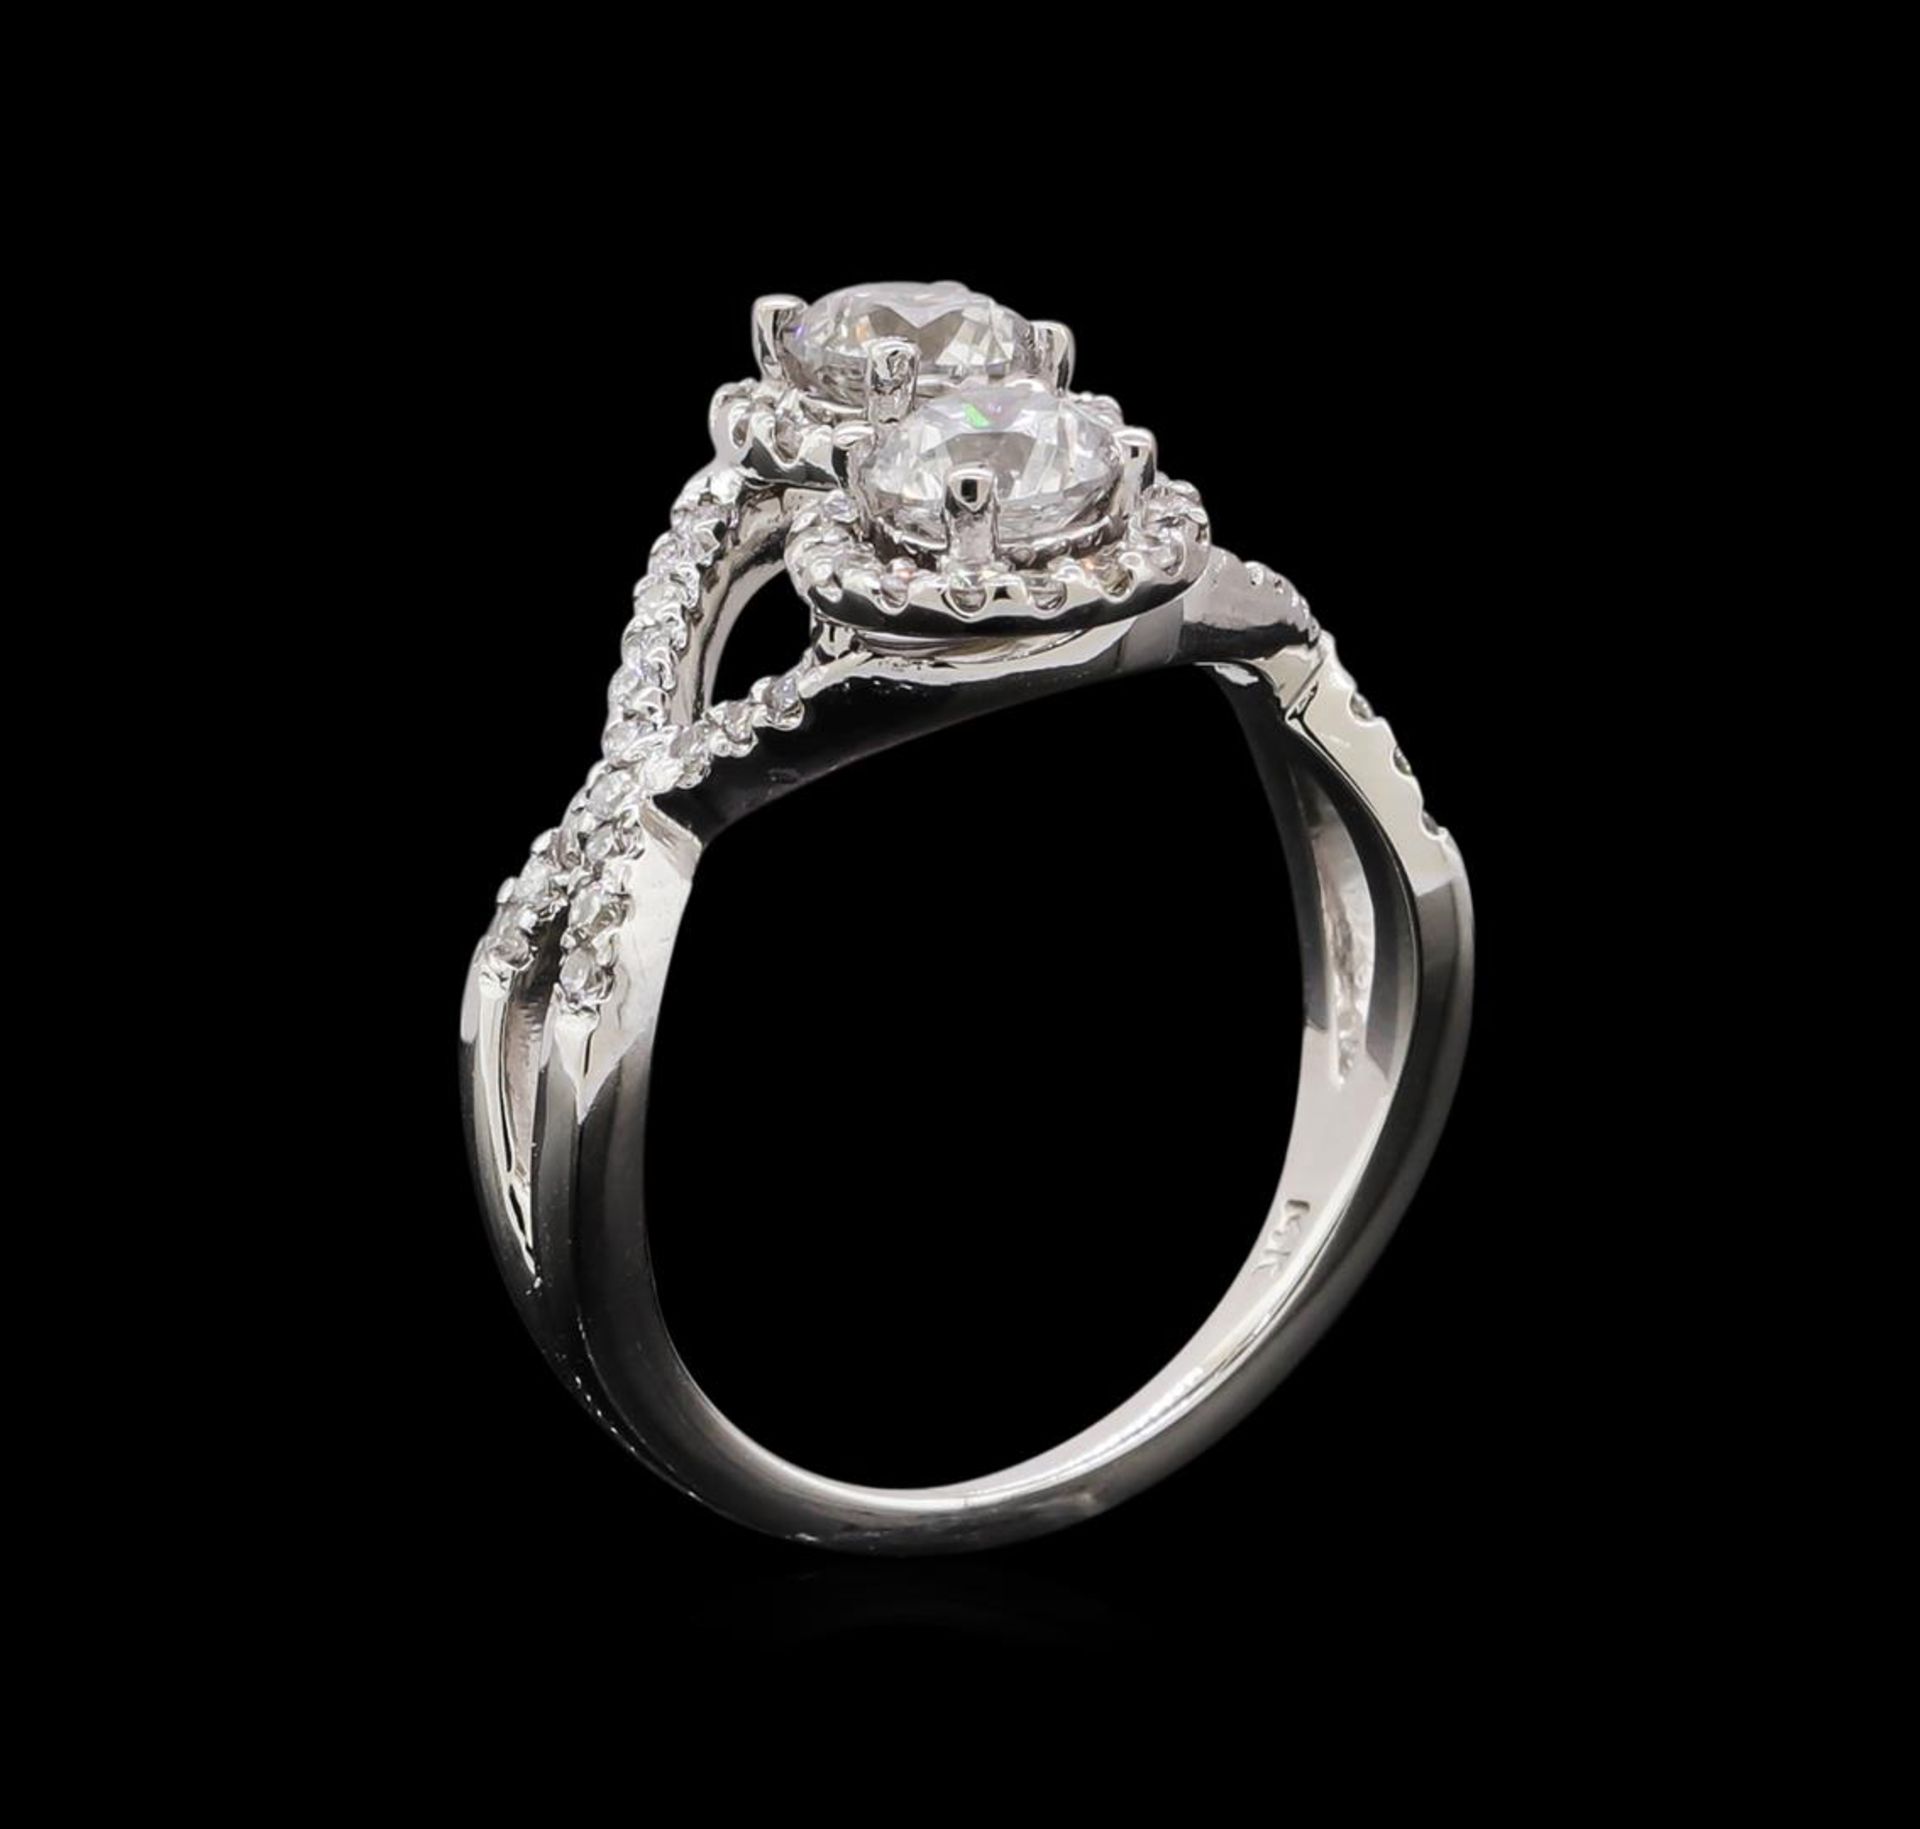 1.47 ctw Diamond Ring - 14KT White Gold - Image 4 of 5